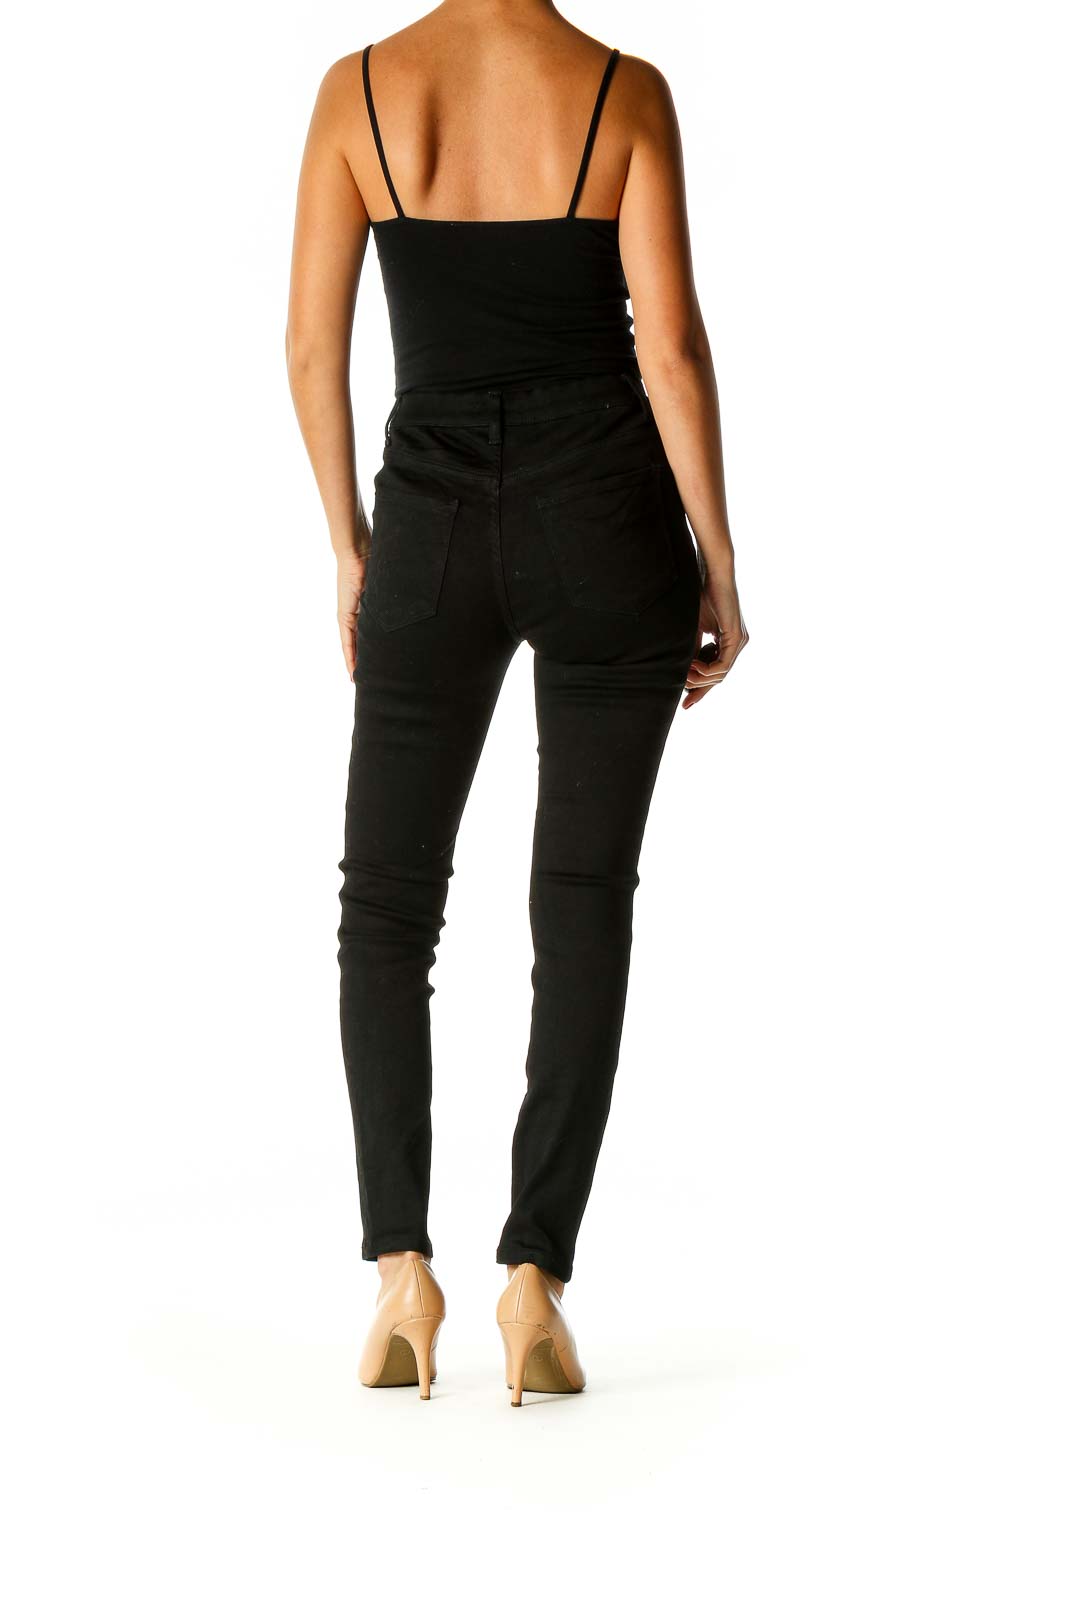 Simply Vera Vera Wang - Black Skinny Jeans Polyester Cotton Spandex